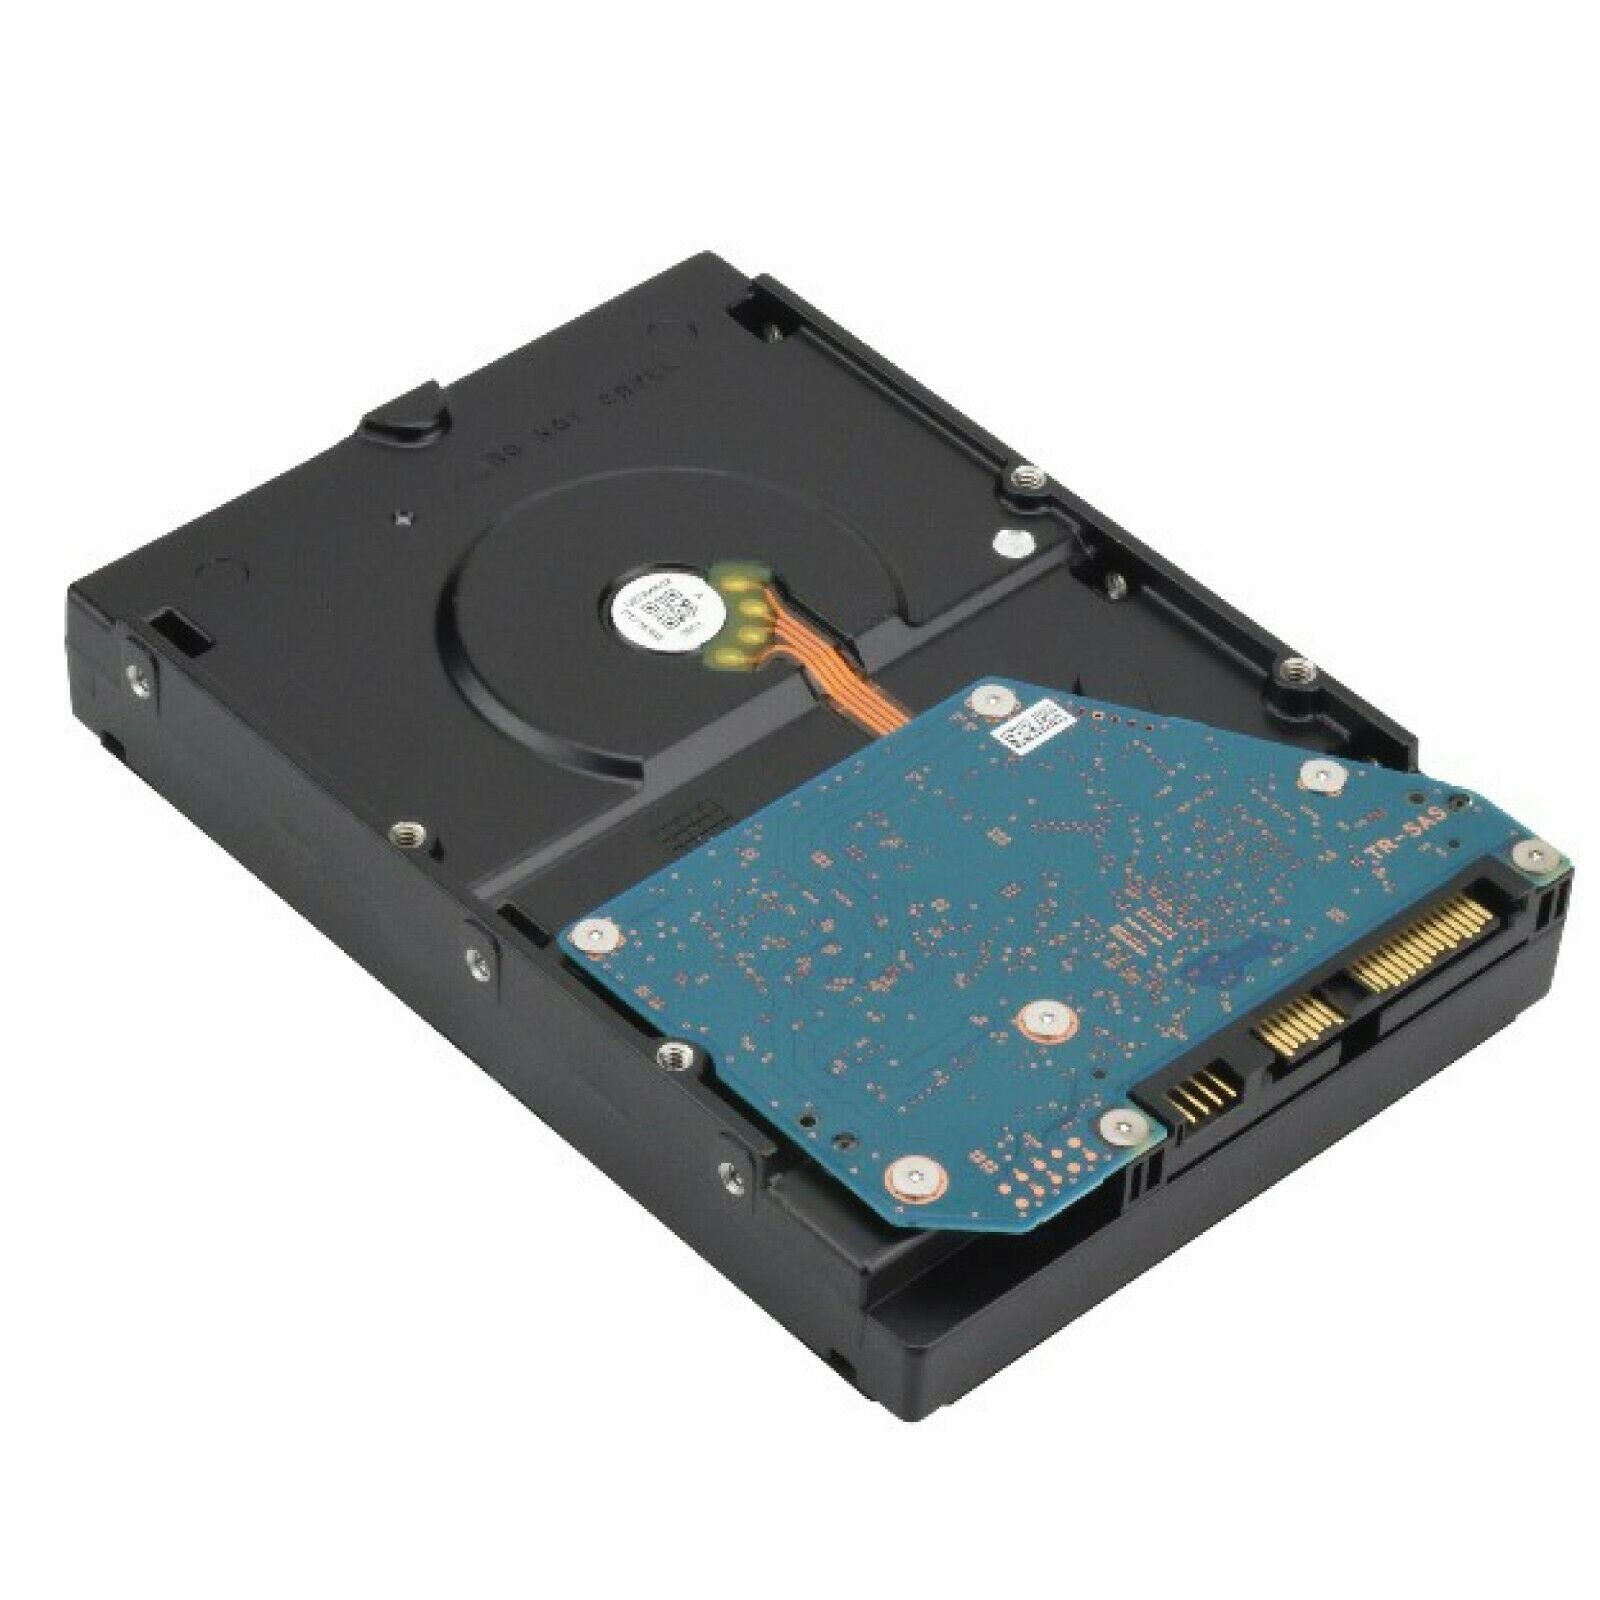 Toshiba (SAS) 3.5" Desktop Internal Hard Drive 4TB 7200rpm MG04SCA40EA, New